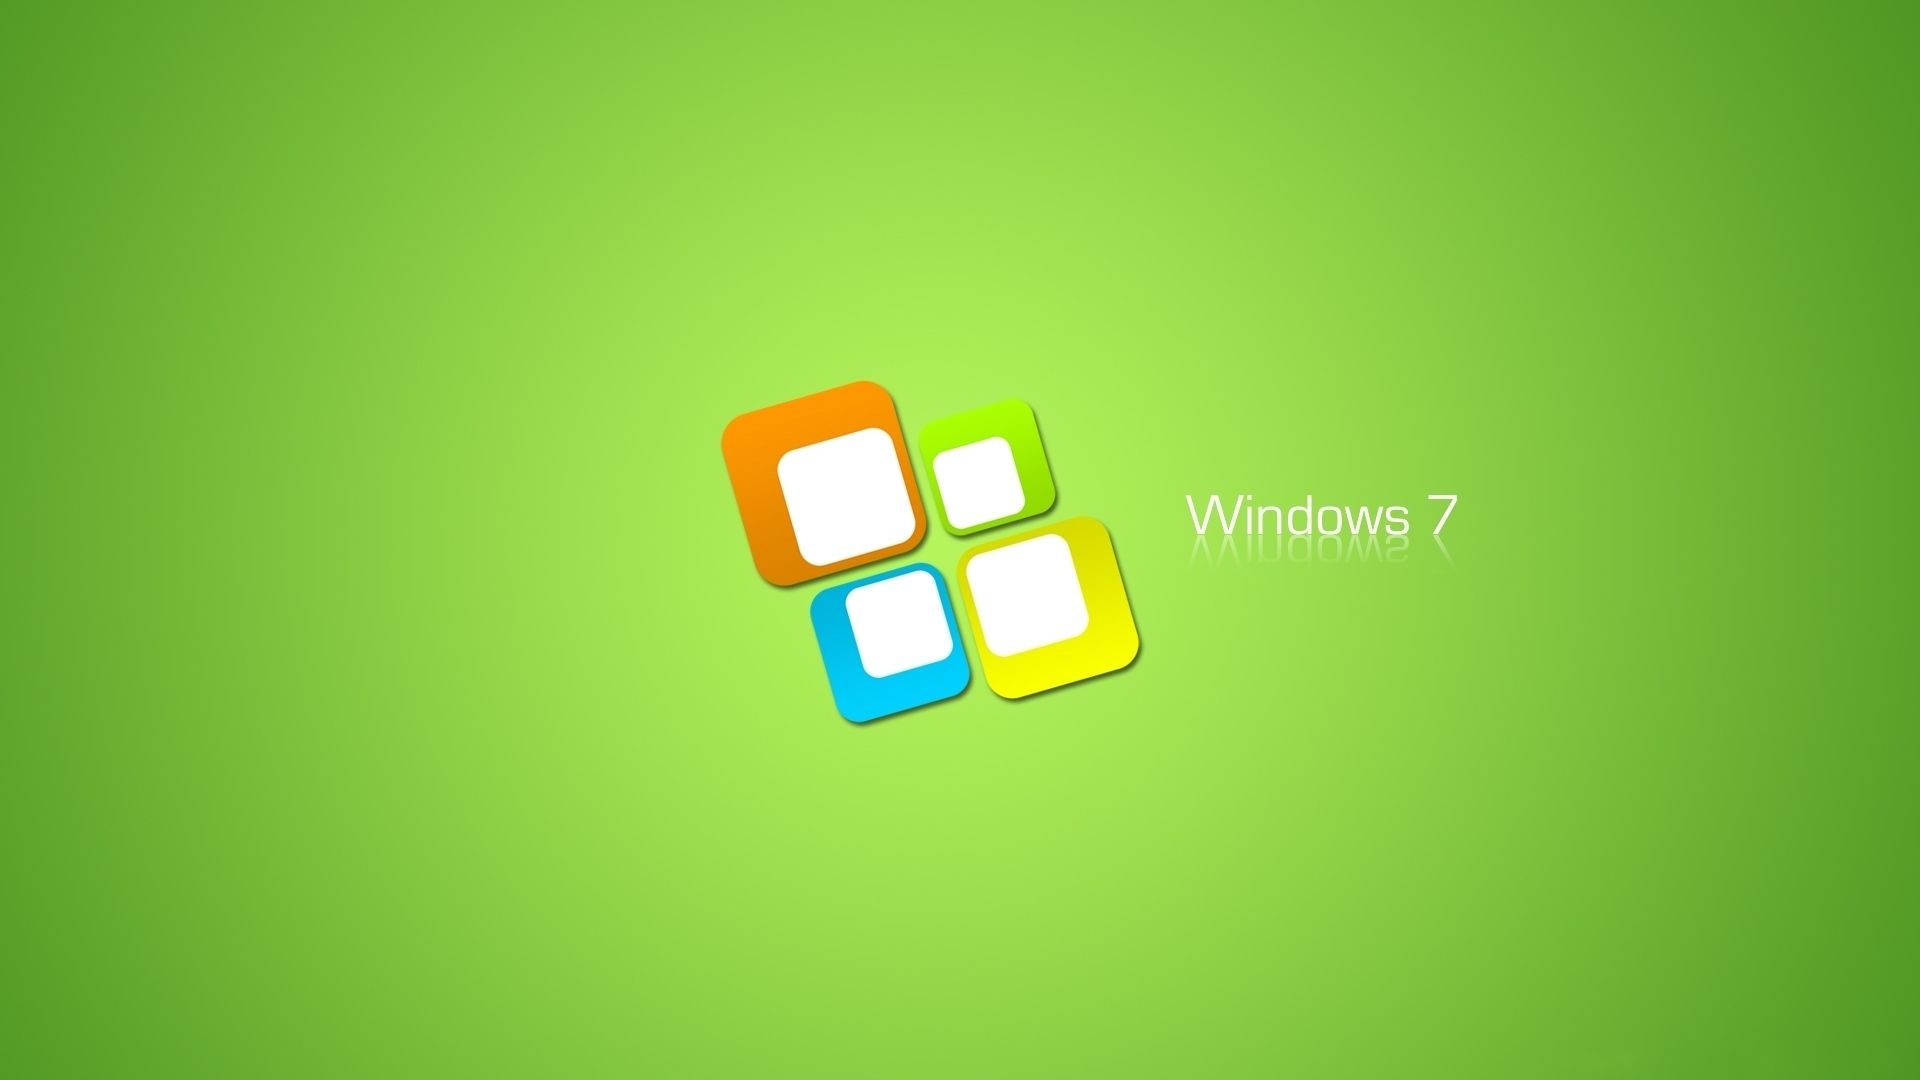 Download Wallpaper 1920x1080 Windows 7, Square, White, Blue, Green ...